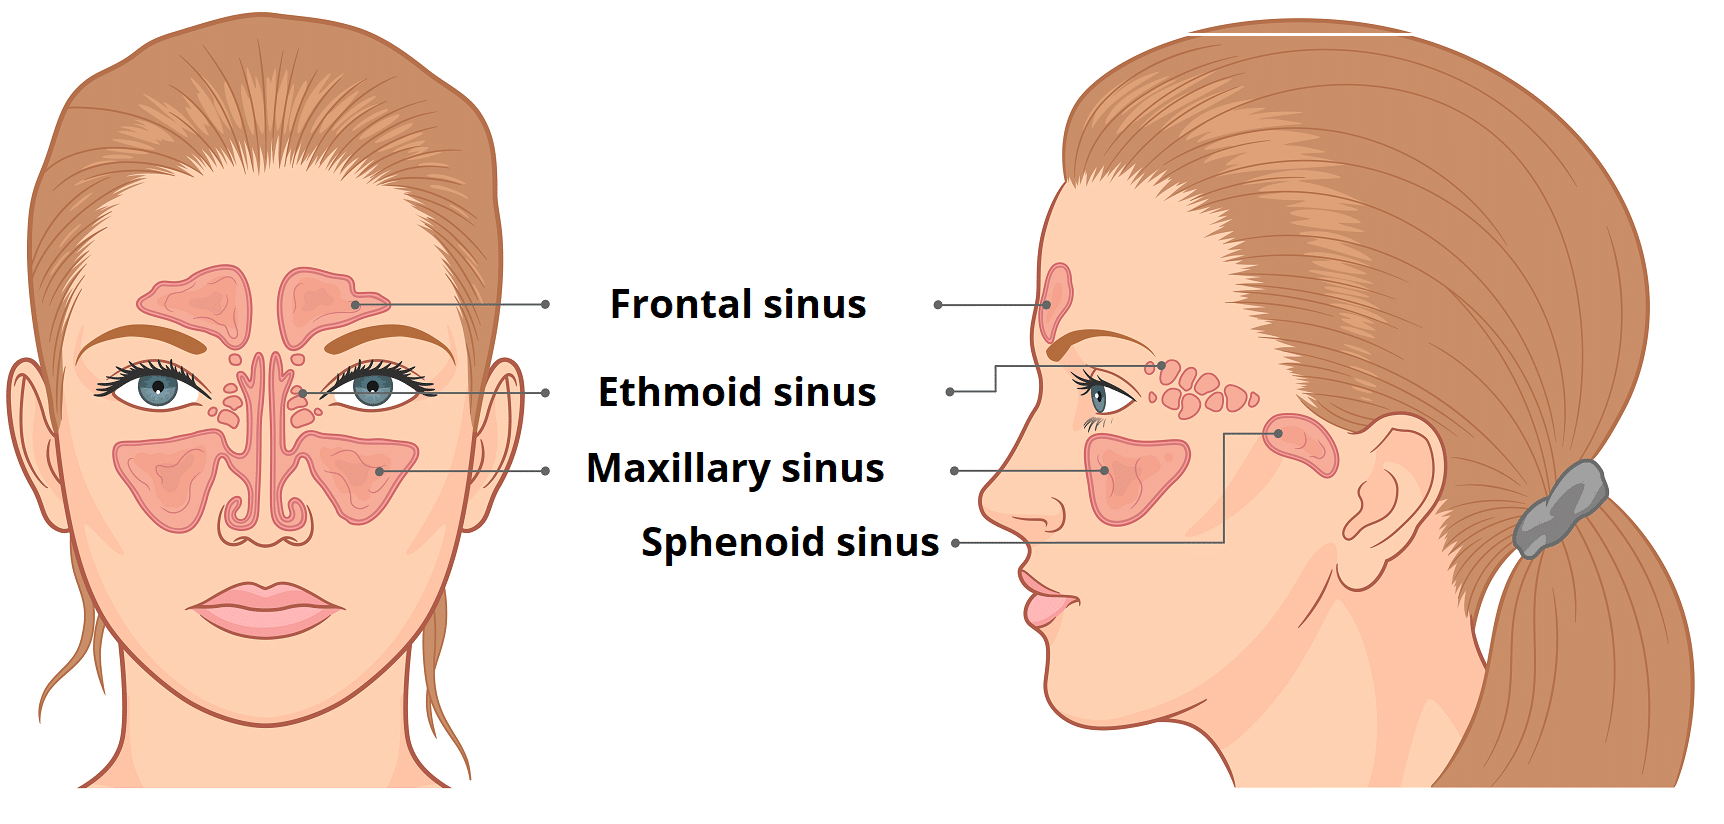 The Paranasal Sinuses - Structure - Function - TeachMeAnatomy